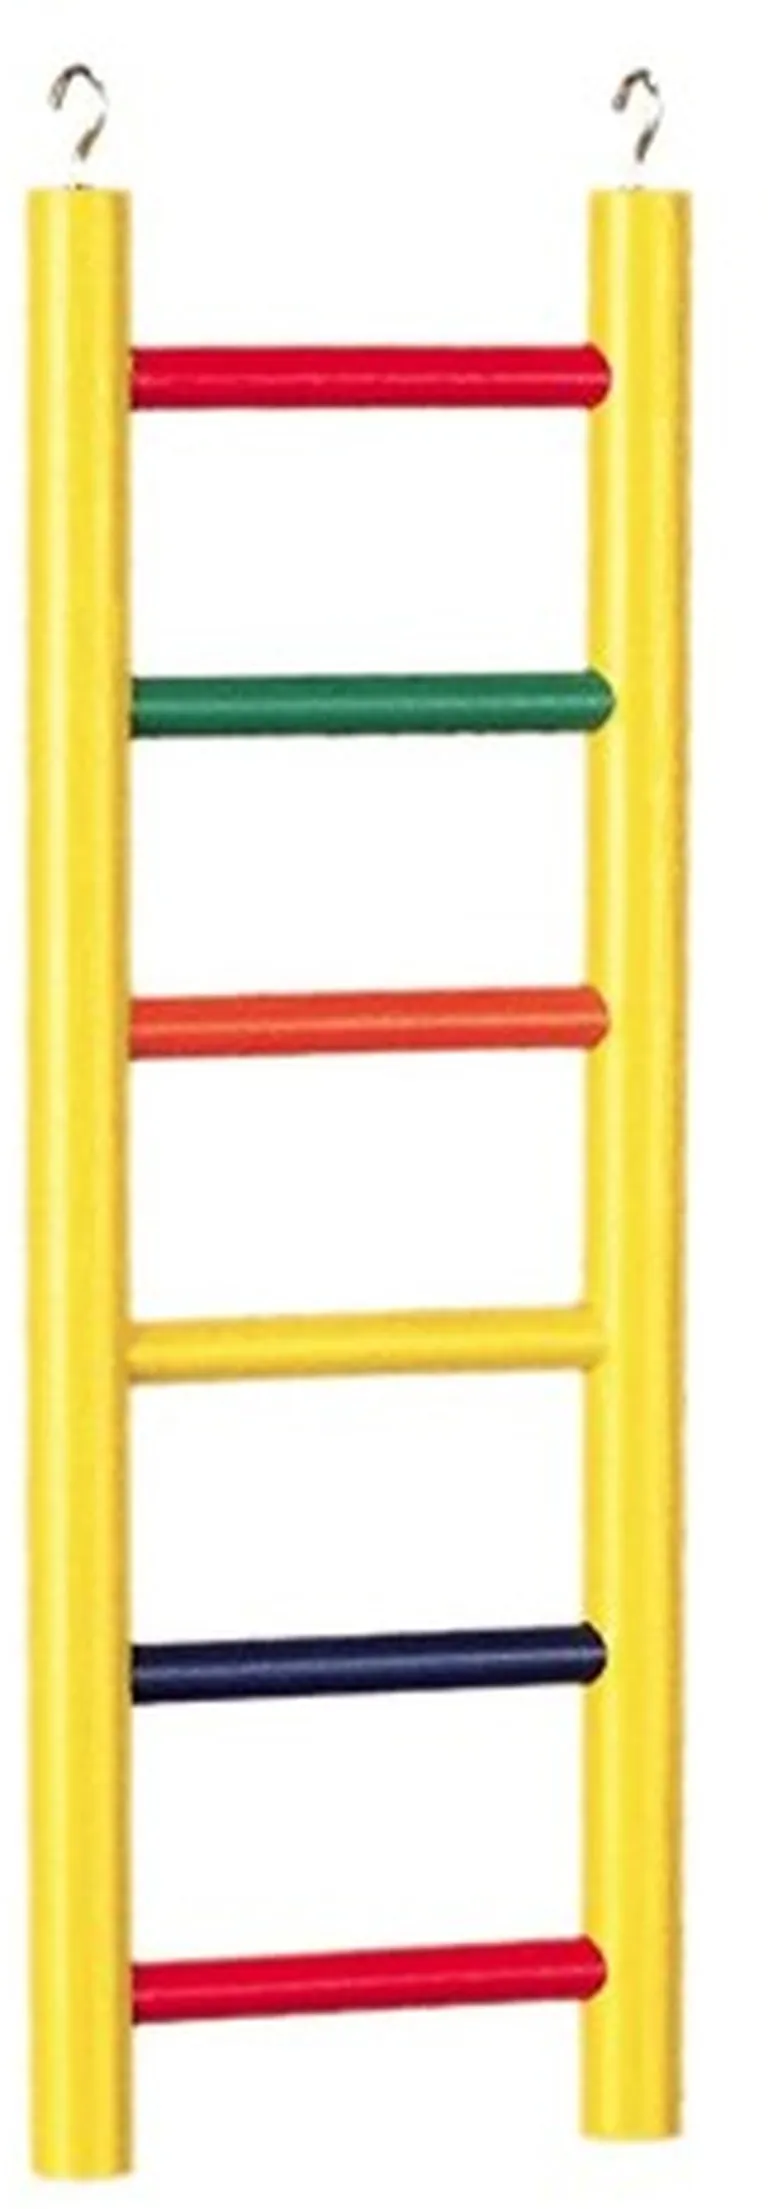 Prevue Carpenter Creations Hardwood Bird Ladder Assorted Colors Photo 2